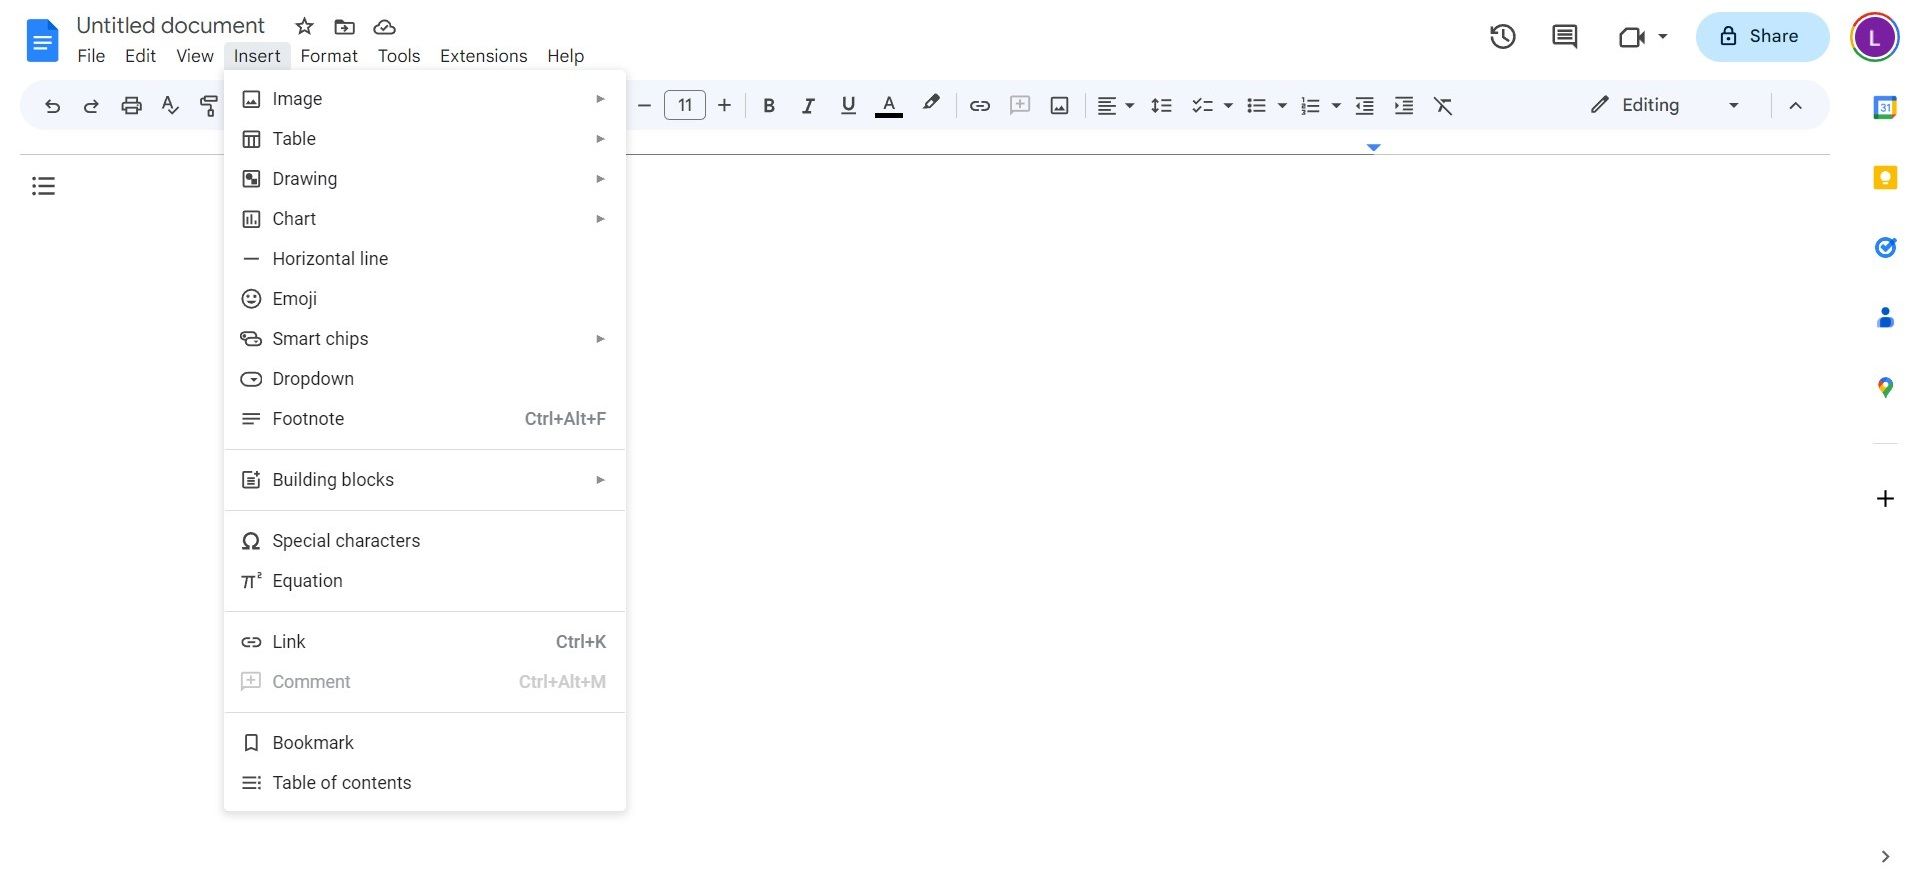 Screenshot shows an empty Google Docs document with the insert drop down menu displayed.